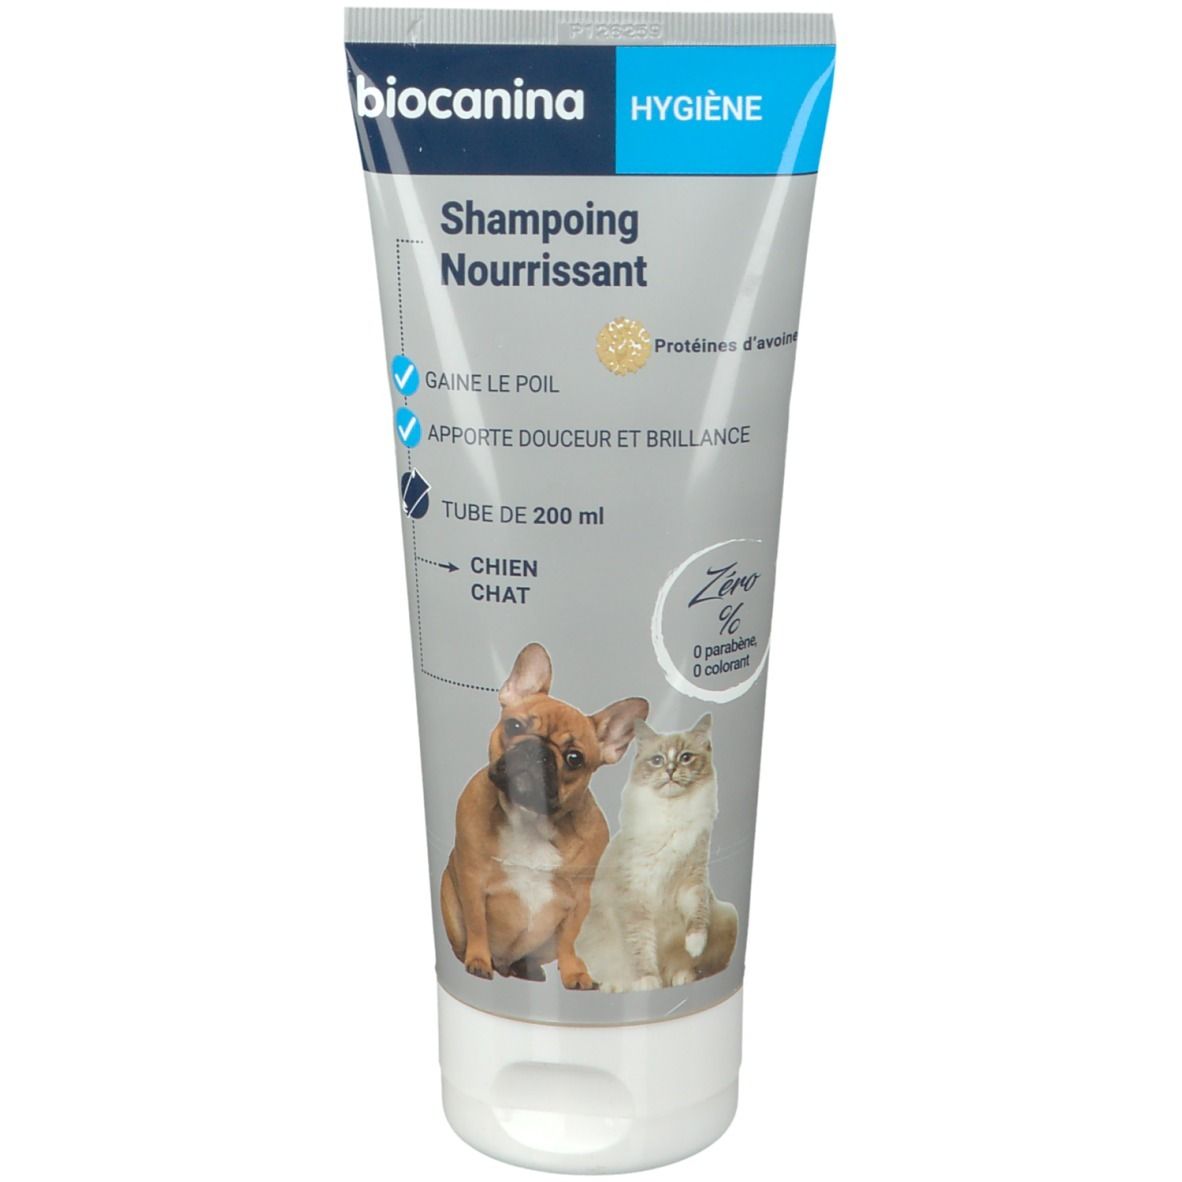 biocanina Shampoing Nourrissant